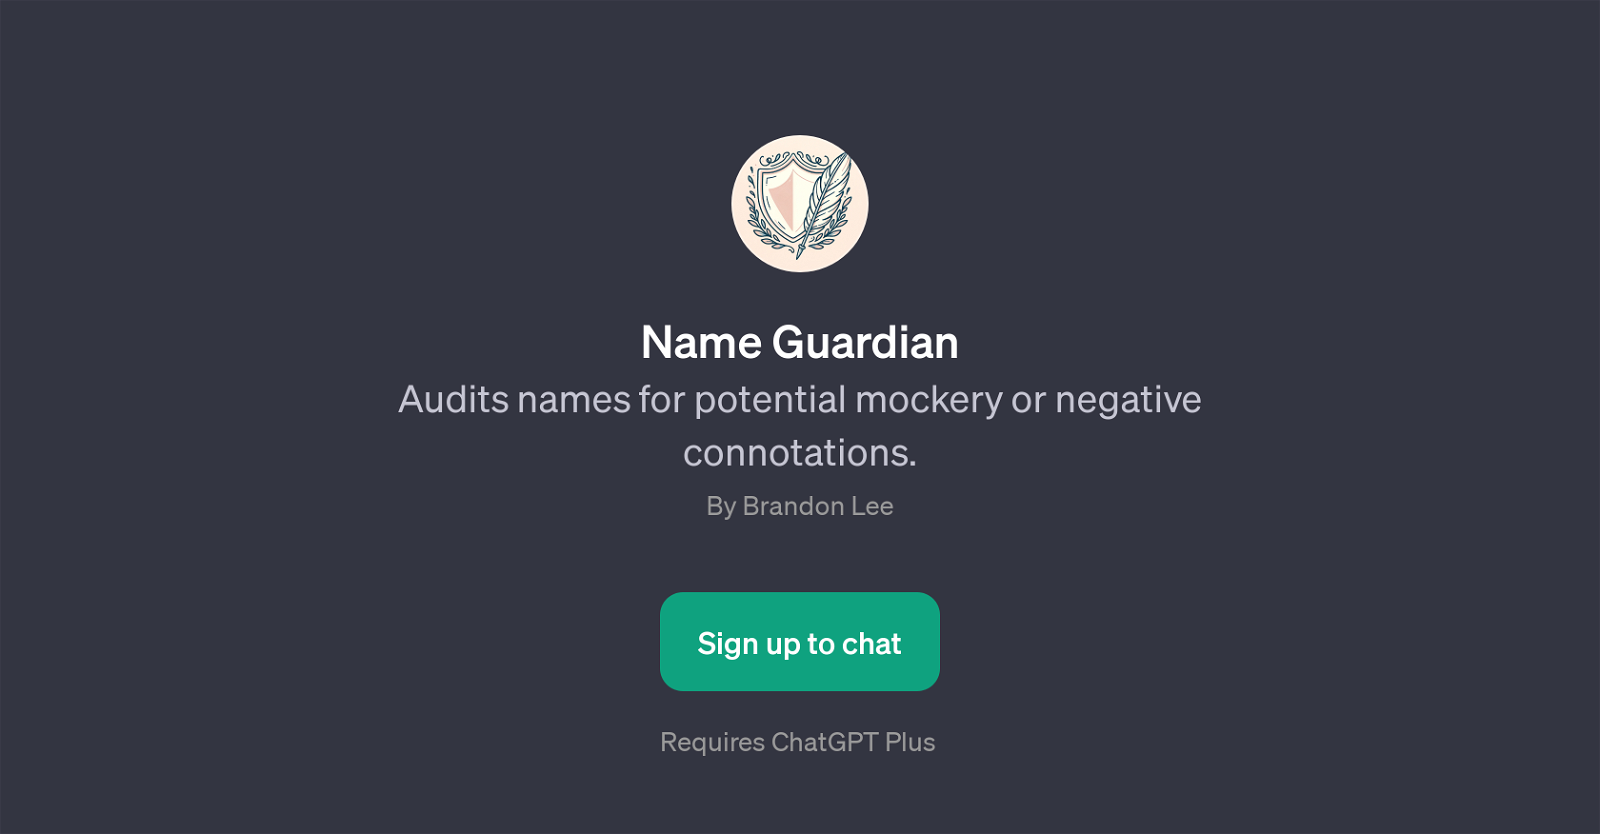 Name Guardian website